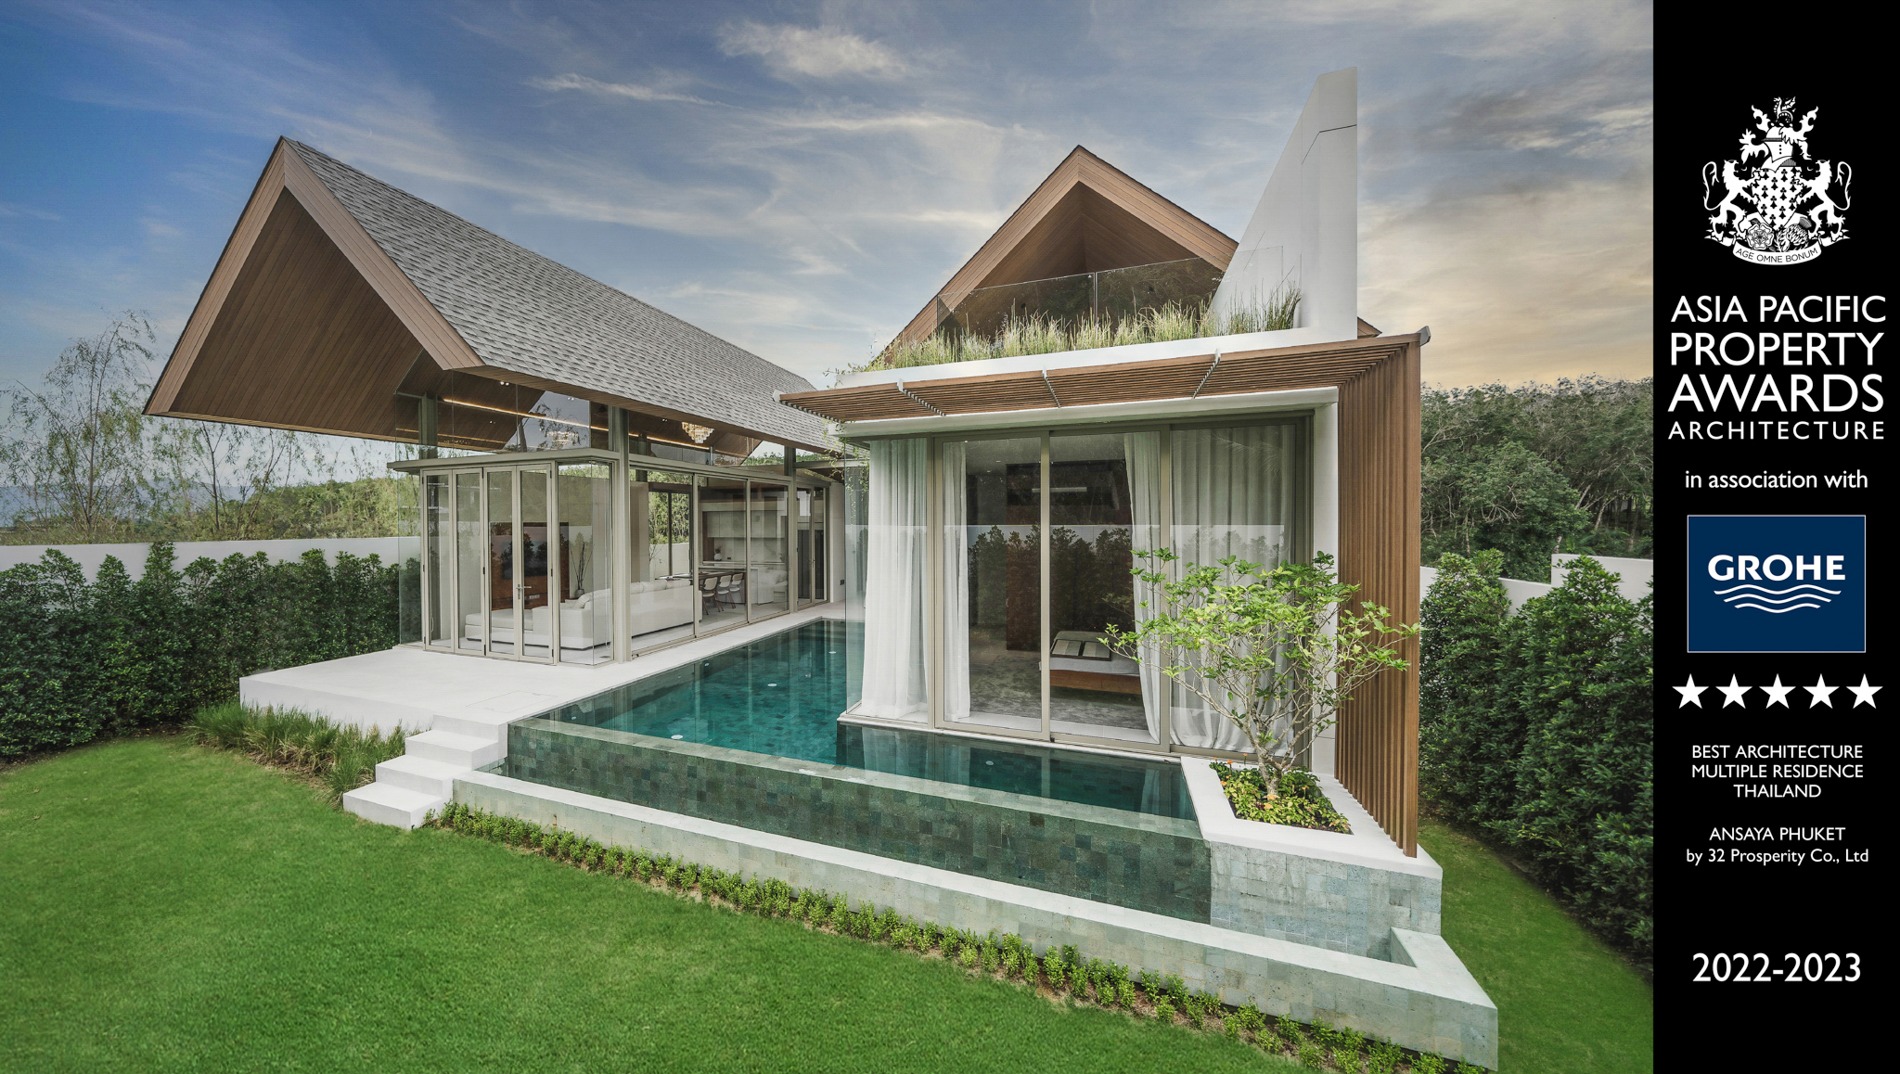 ANSAYA PHUKET Villa for Sale in Phuket Main Image 2